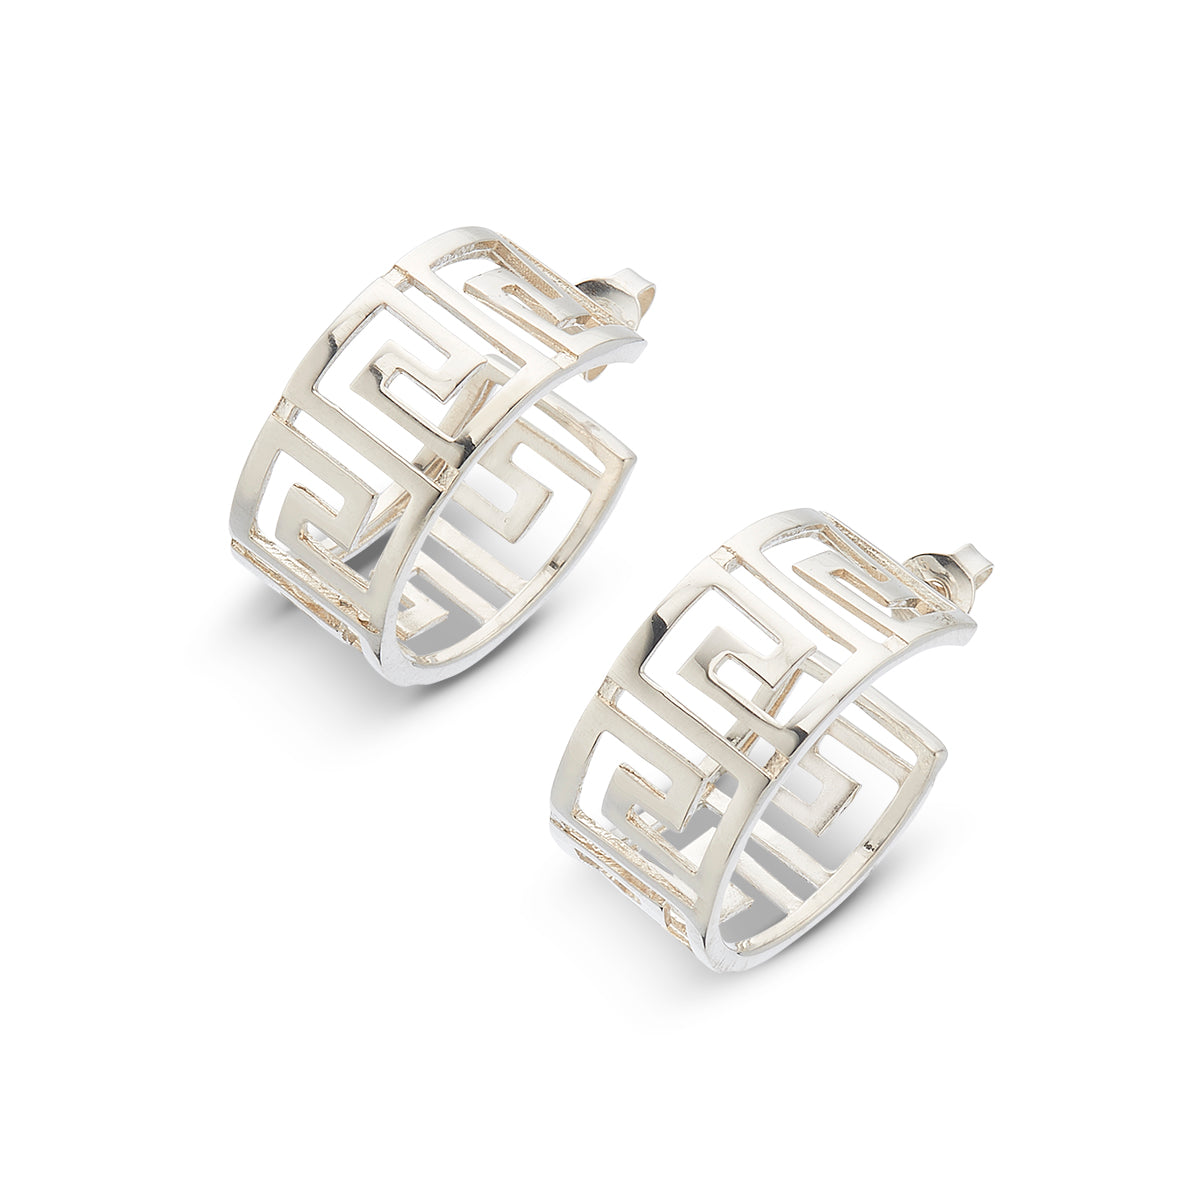 Greek silver key hoop earrings